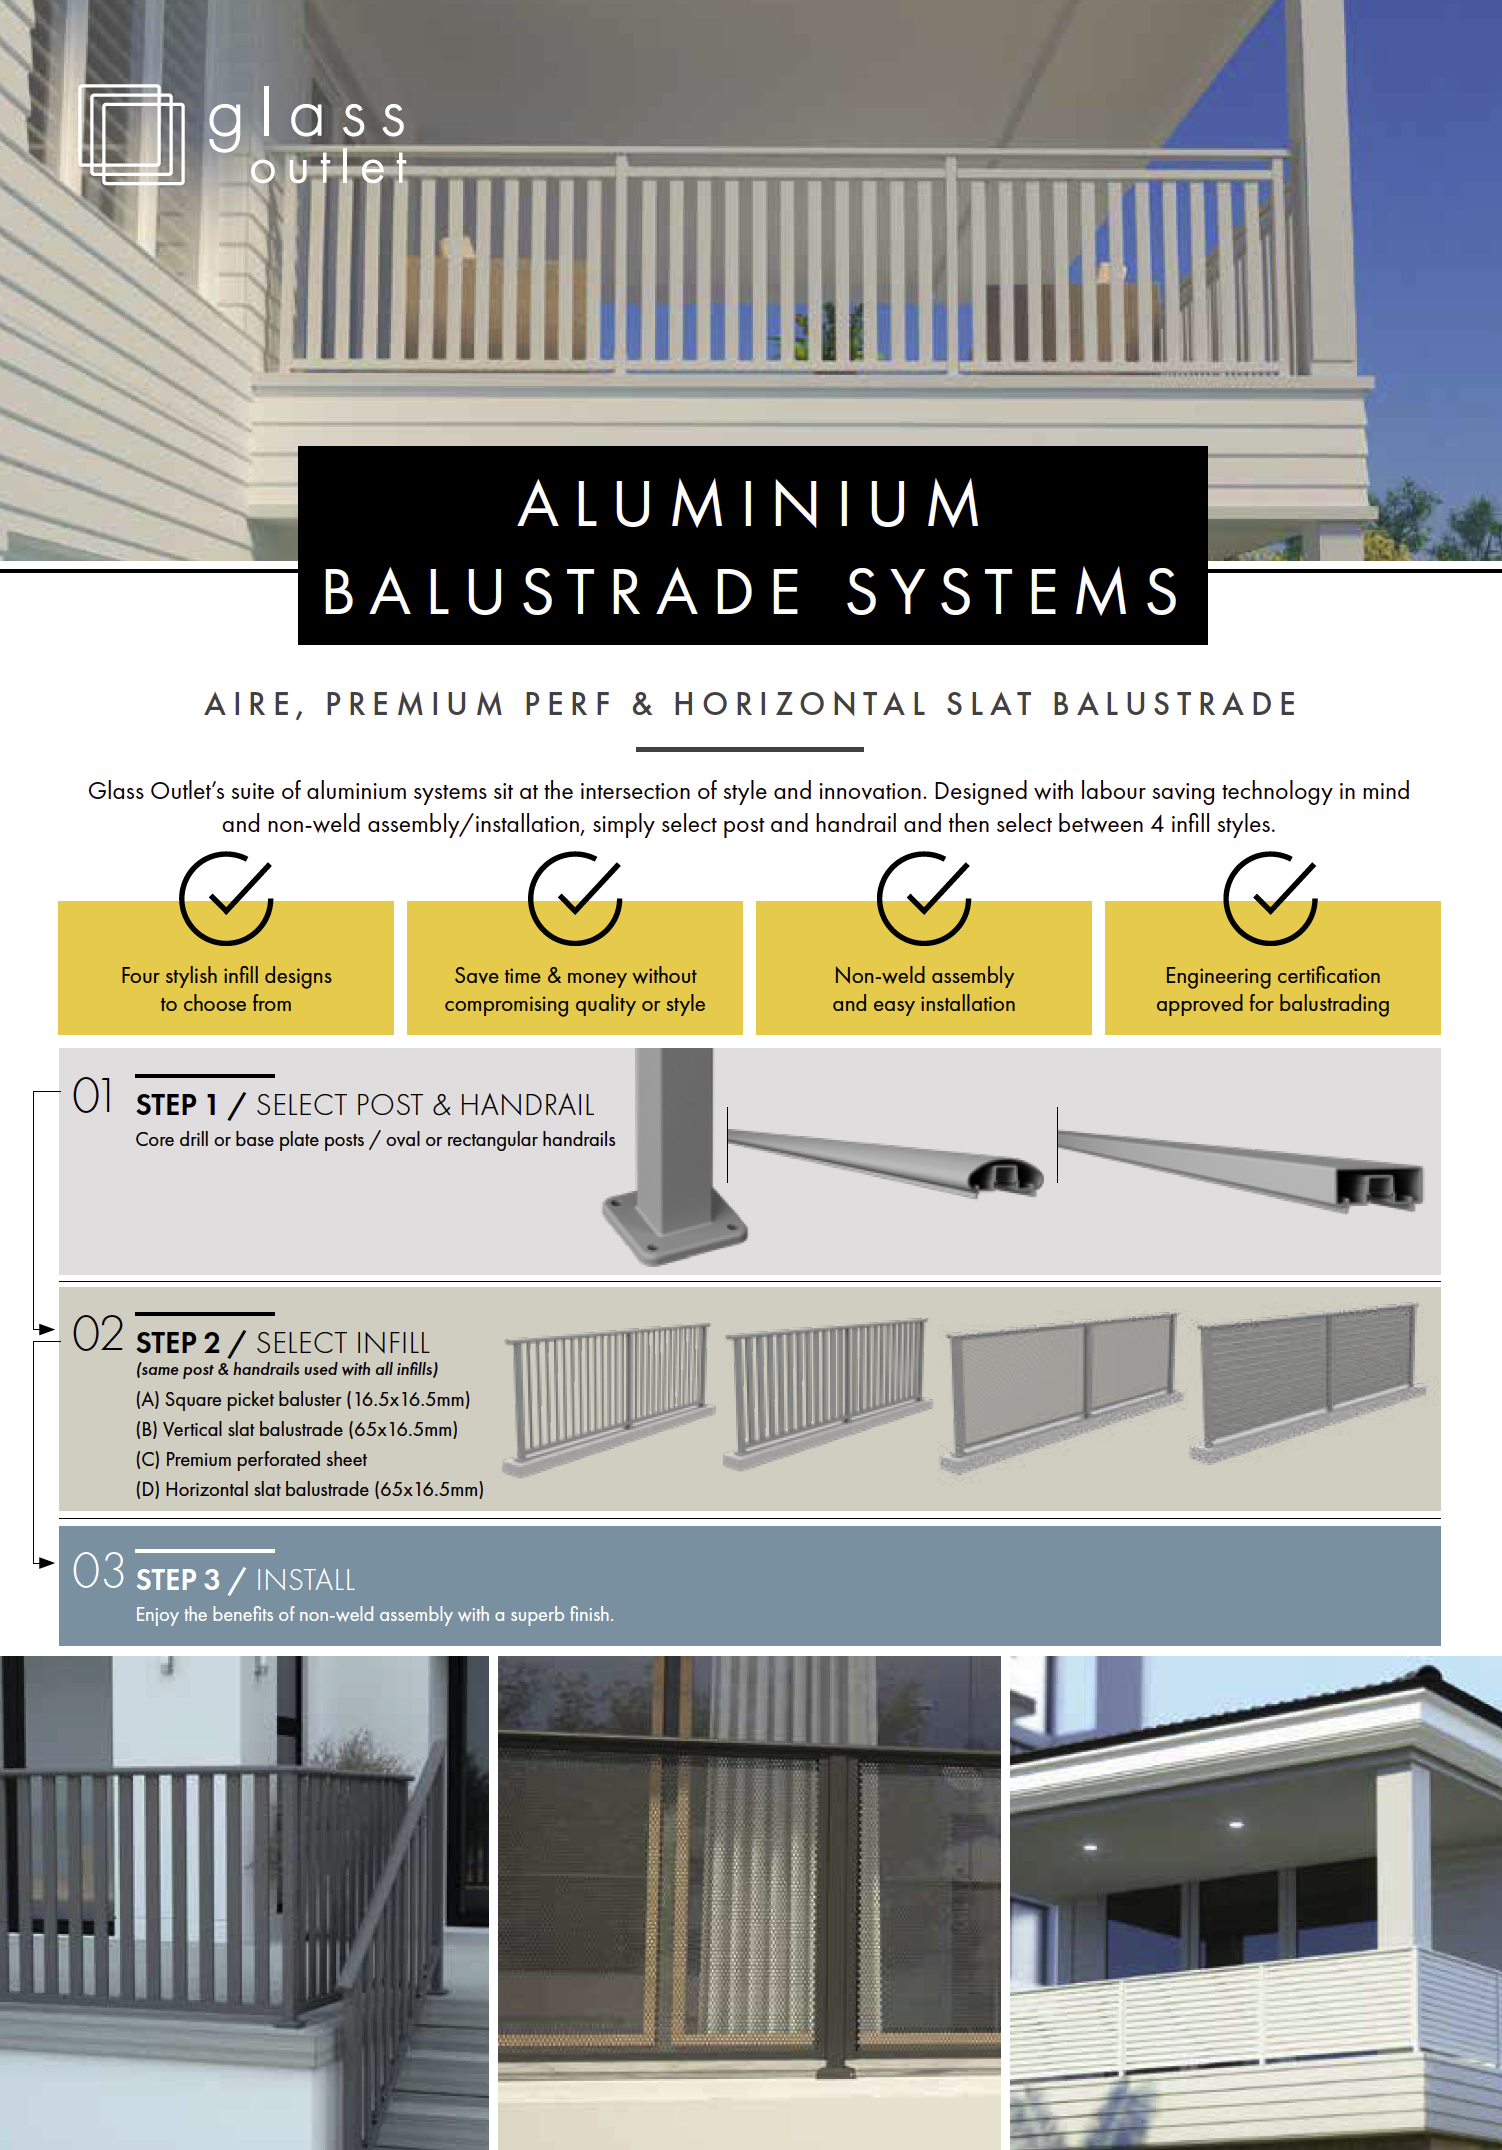 Aluminium balustrade systems